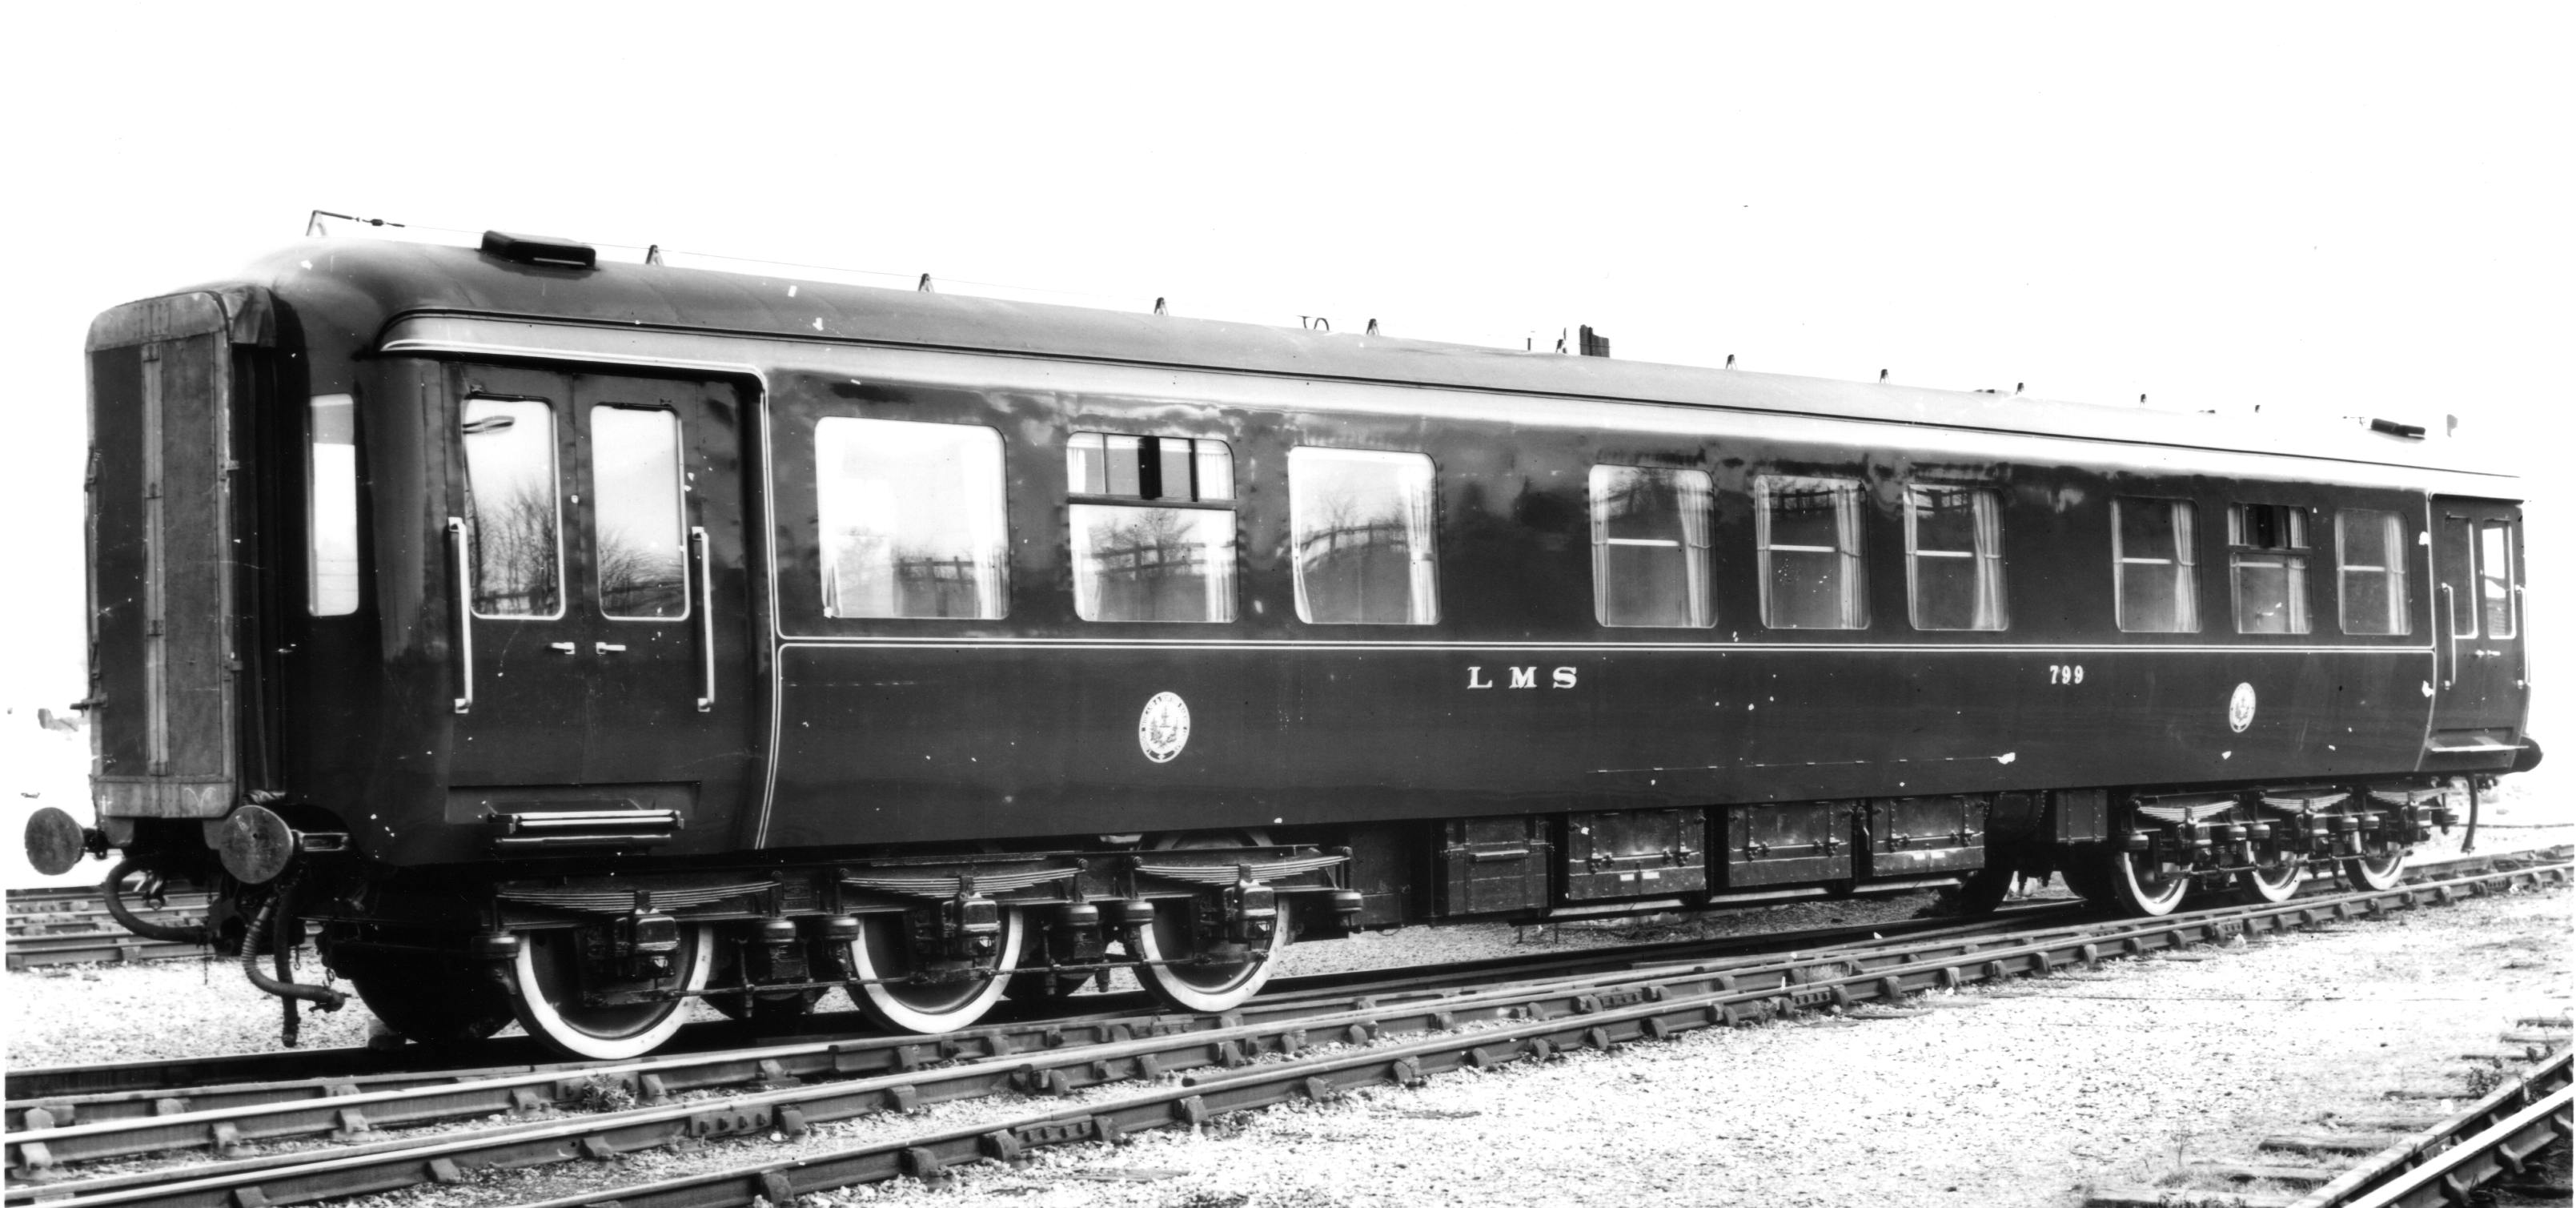 Royal train, Kings saloon carriage.jpg